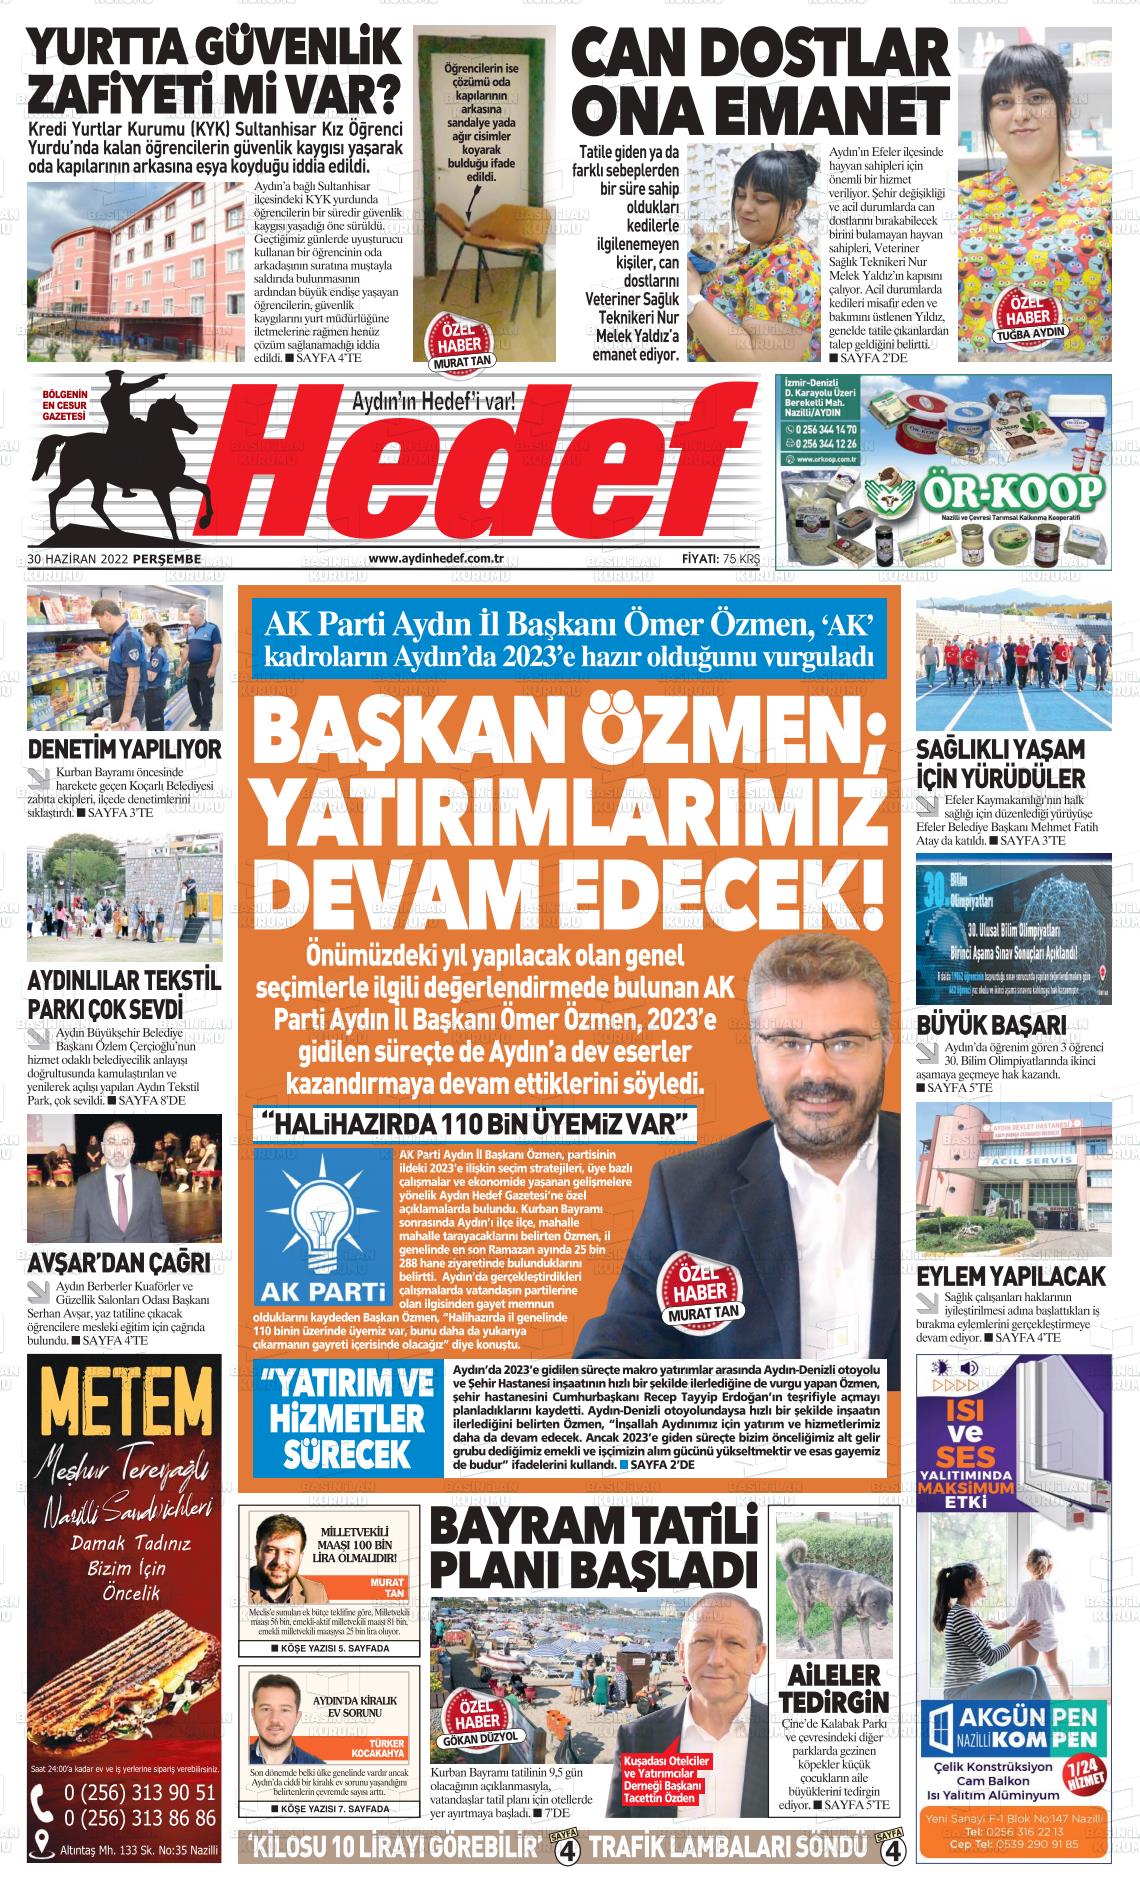 01 Temmuz 2022 Aydın Hedef Gazete Manşeti